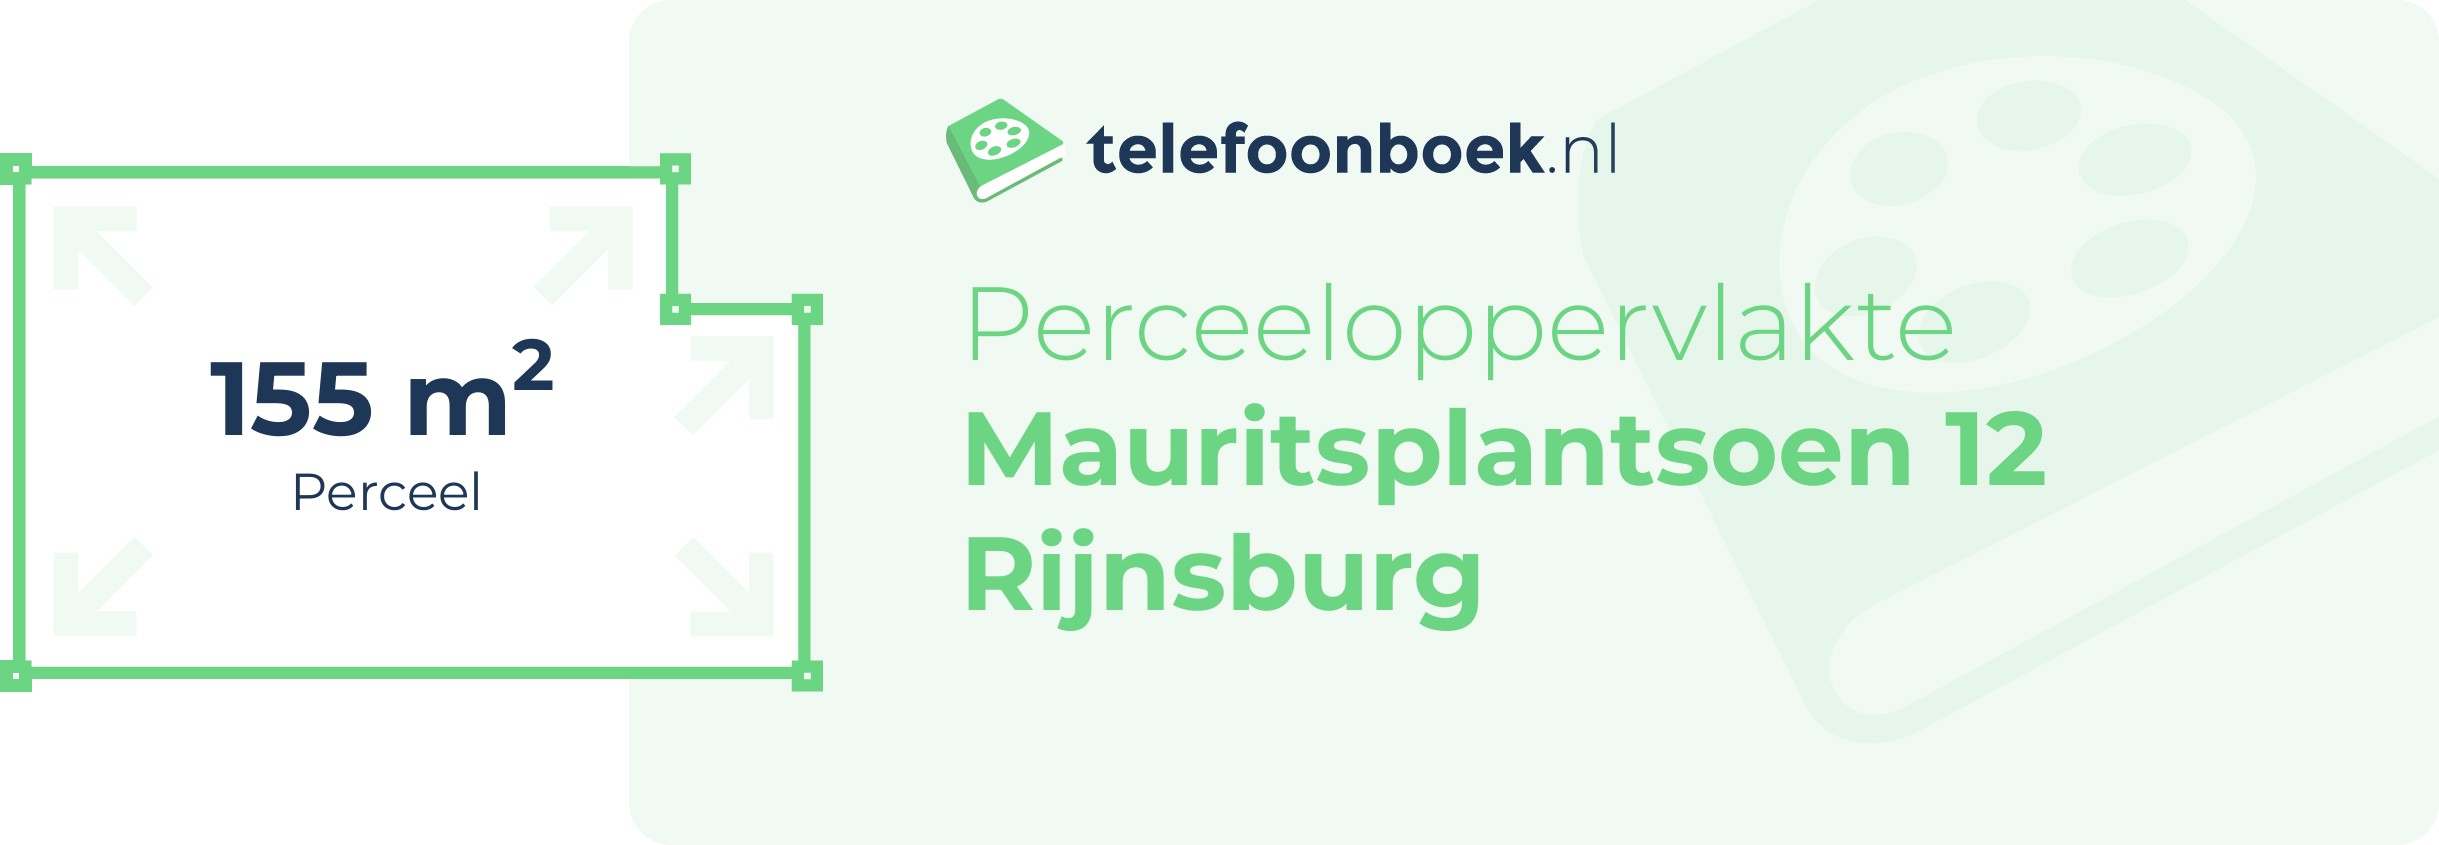 Perceeloppervlakte Mauritsplantsoen 12 Rijnsburg